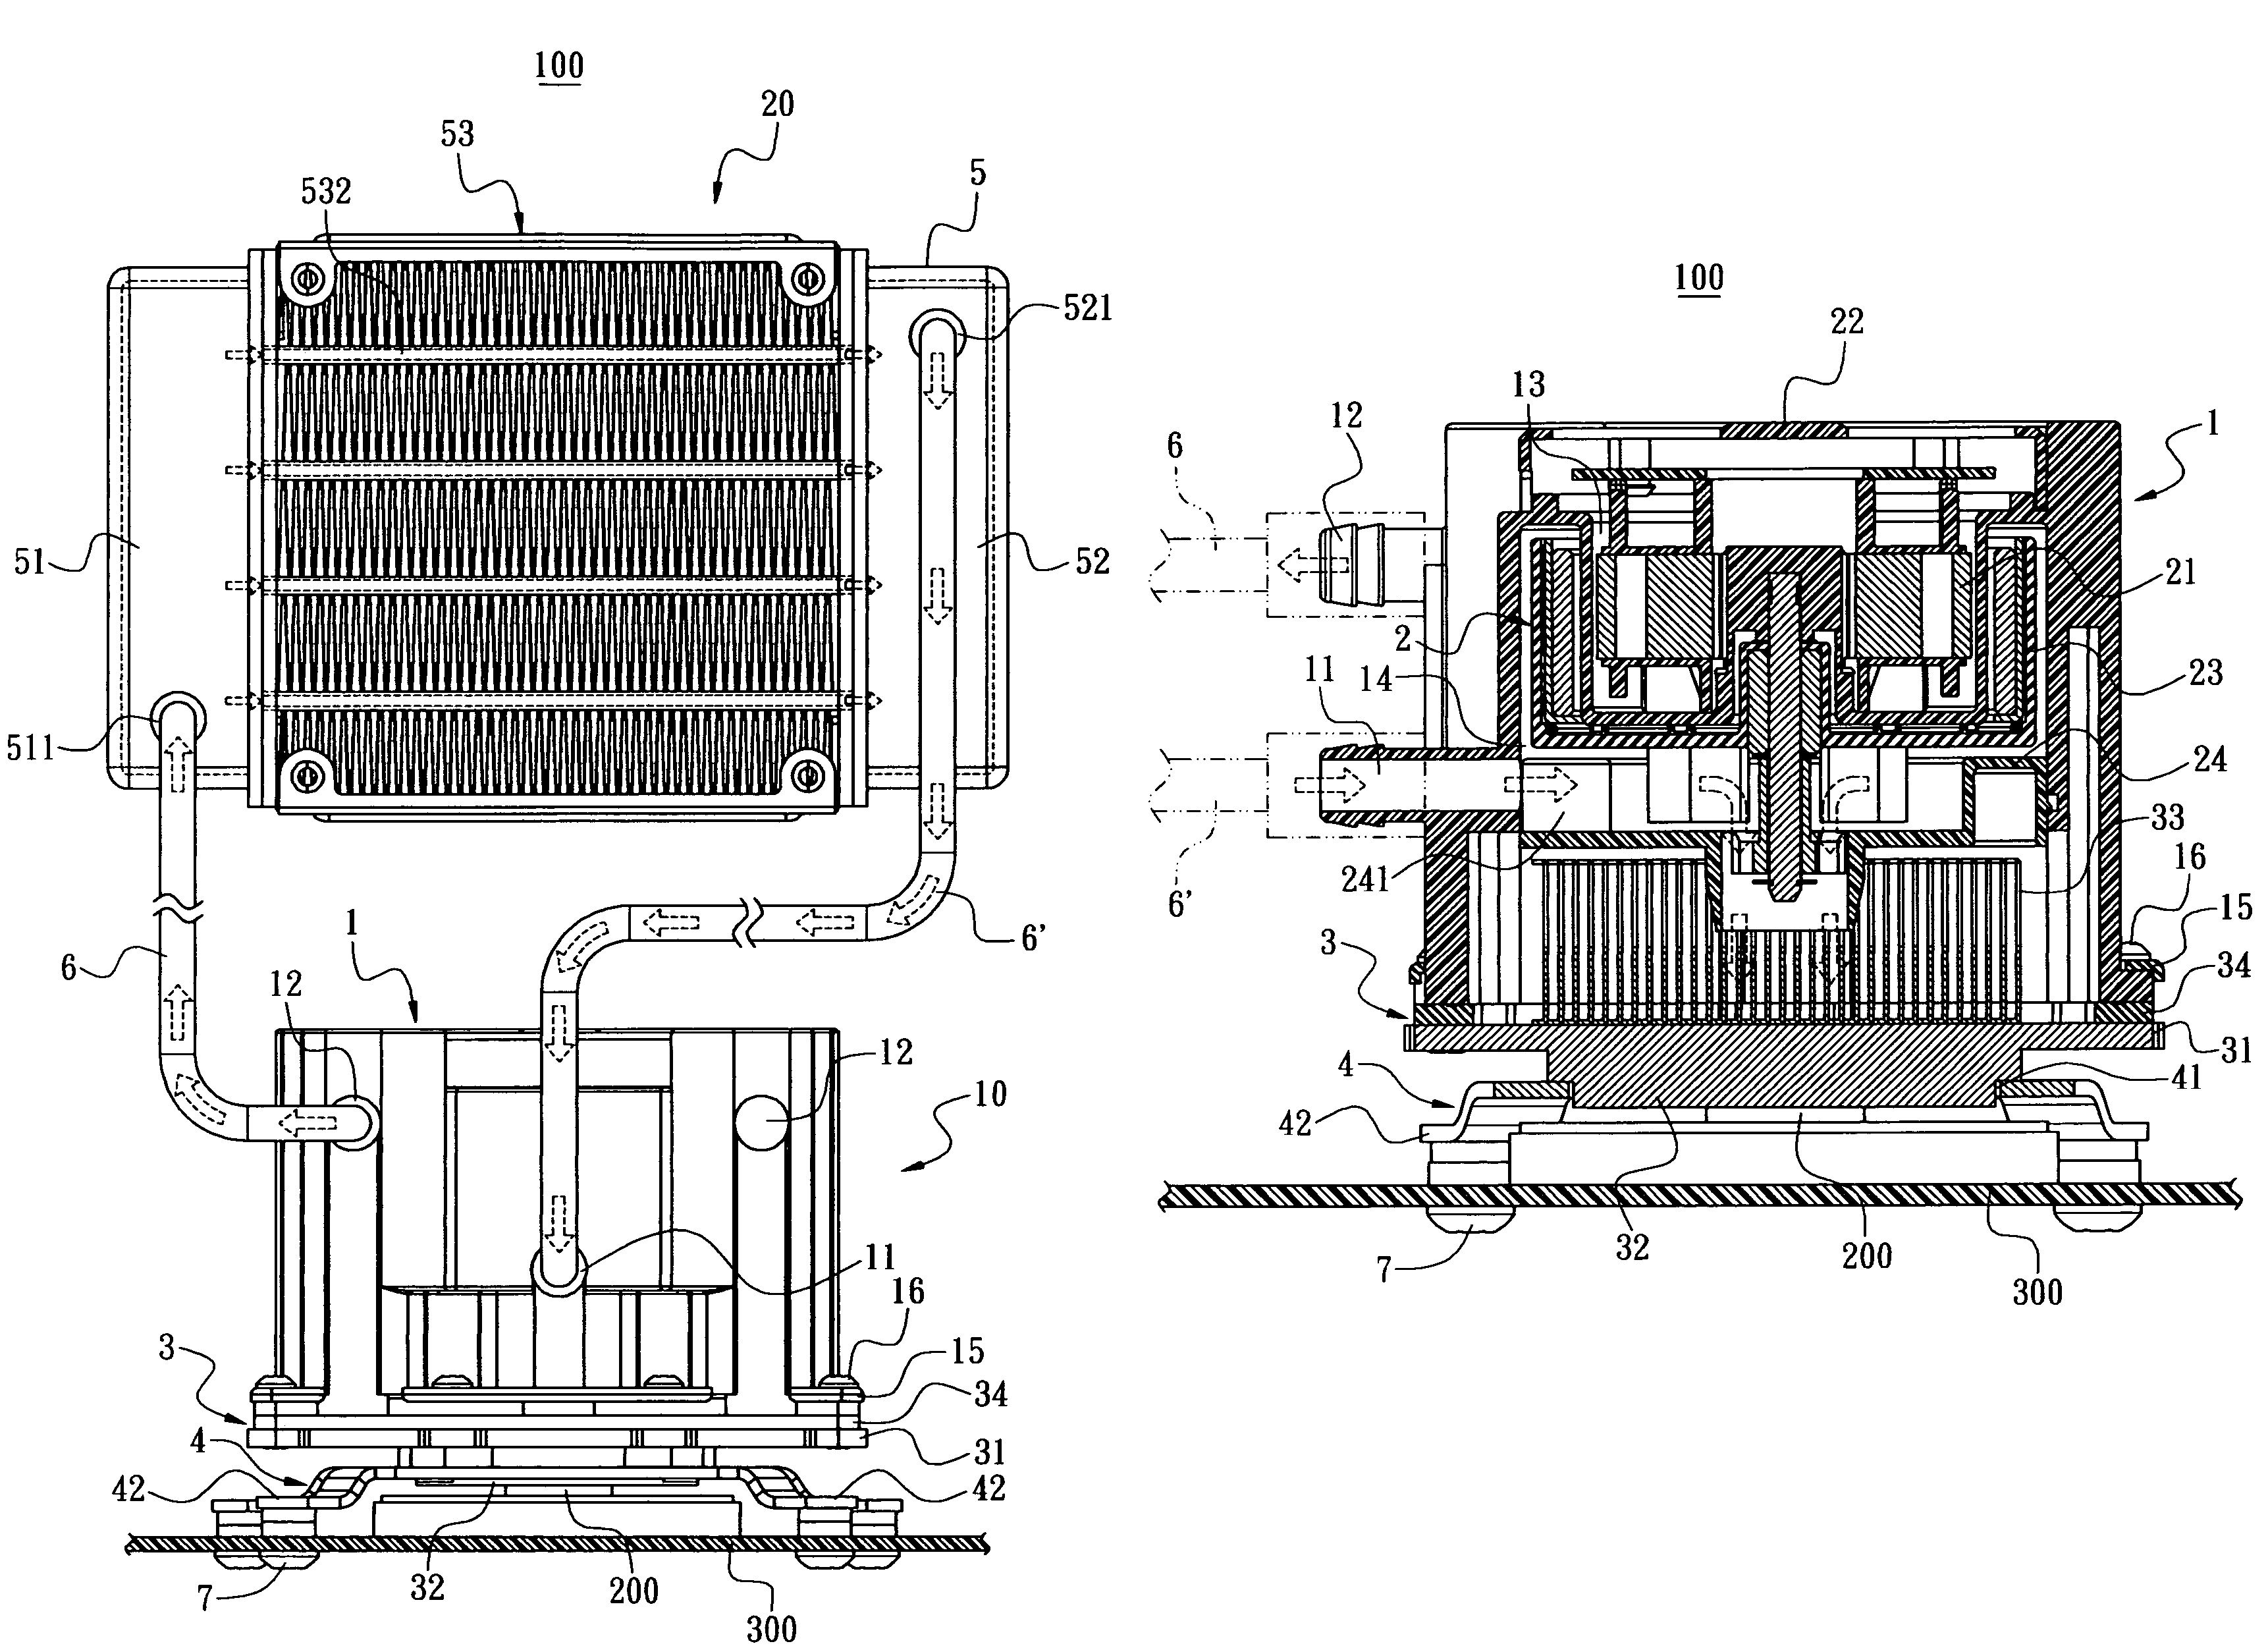 Liquid-cooling heat dissipation apparatus